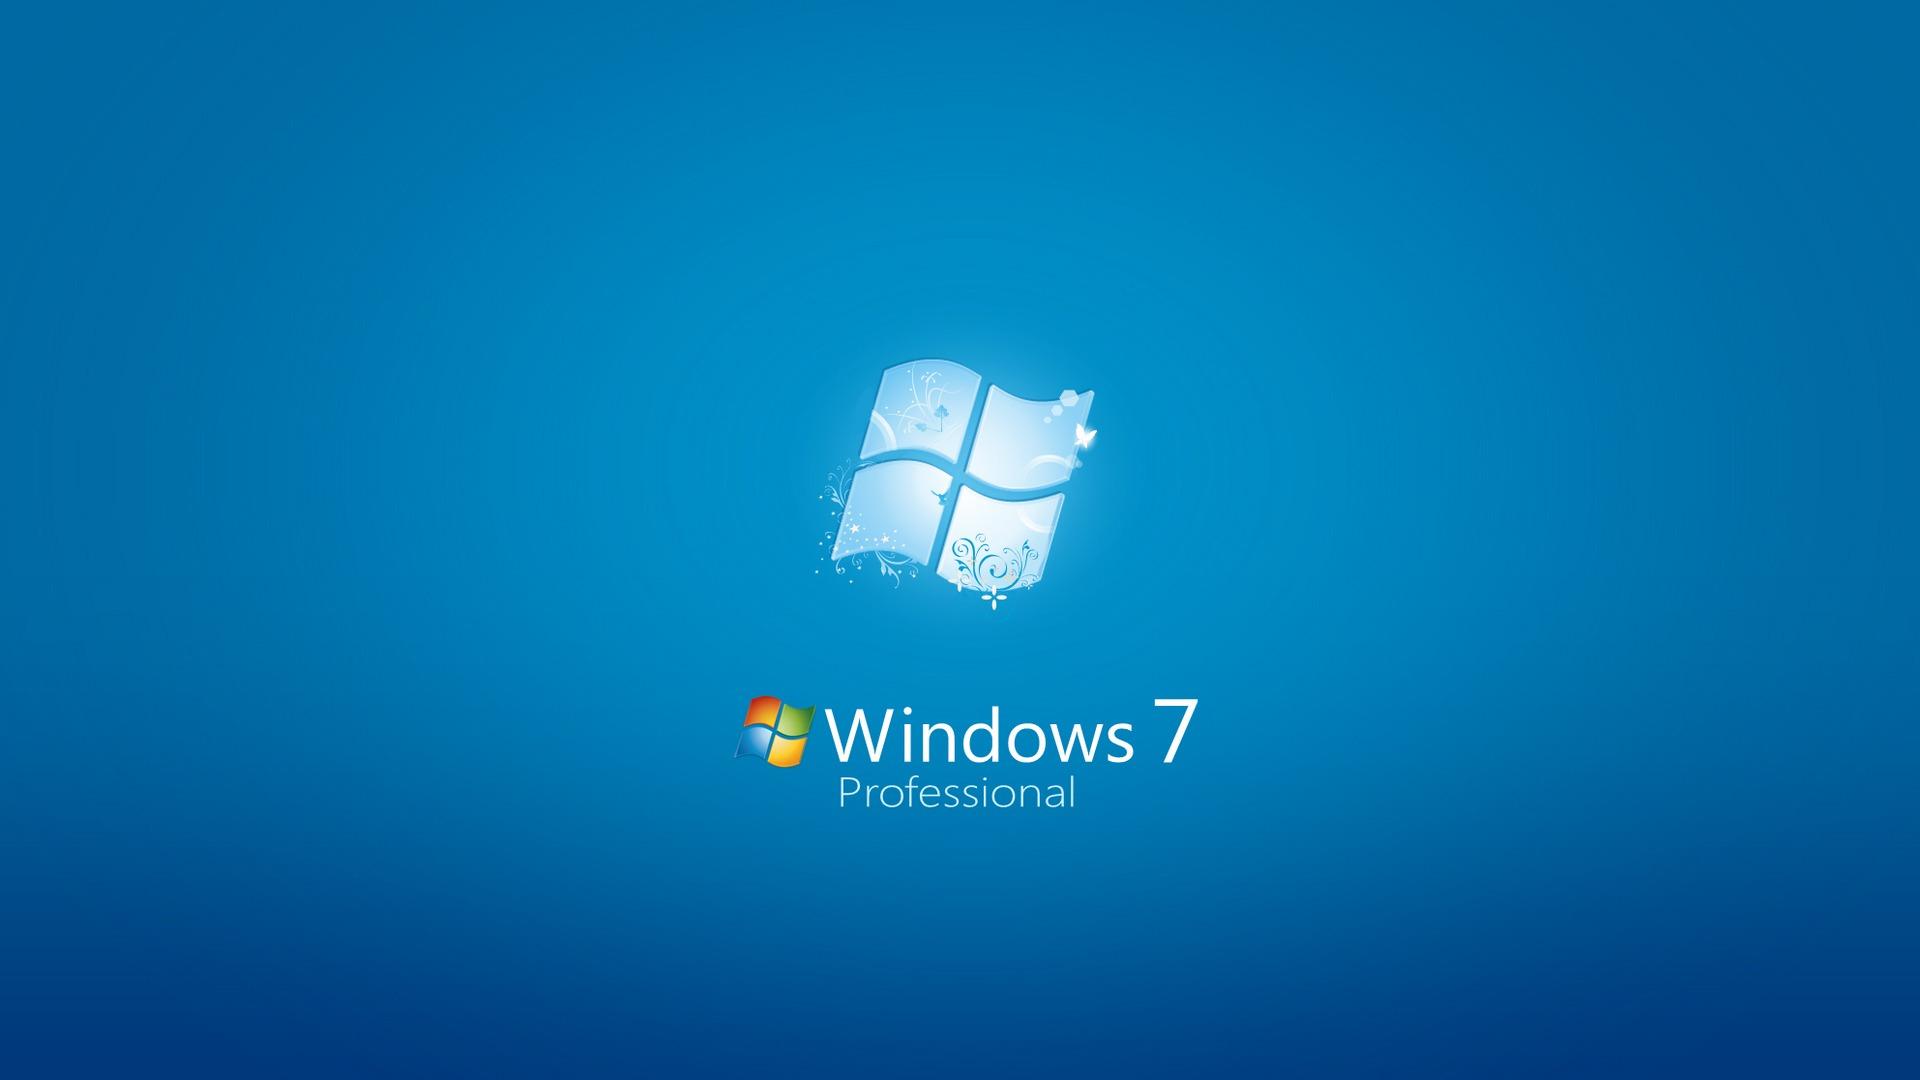 Windows 7 Professional Wallpaper Windows Seven Computers